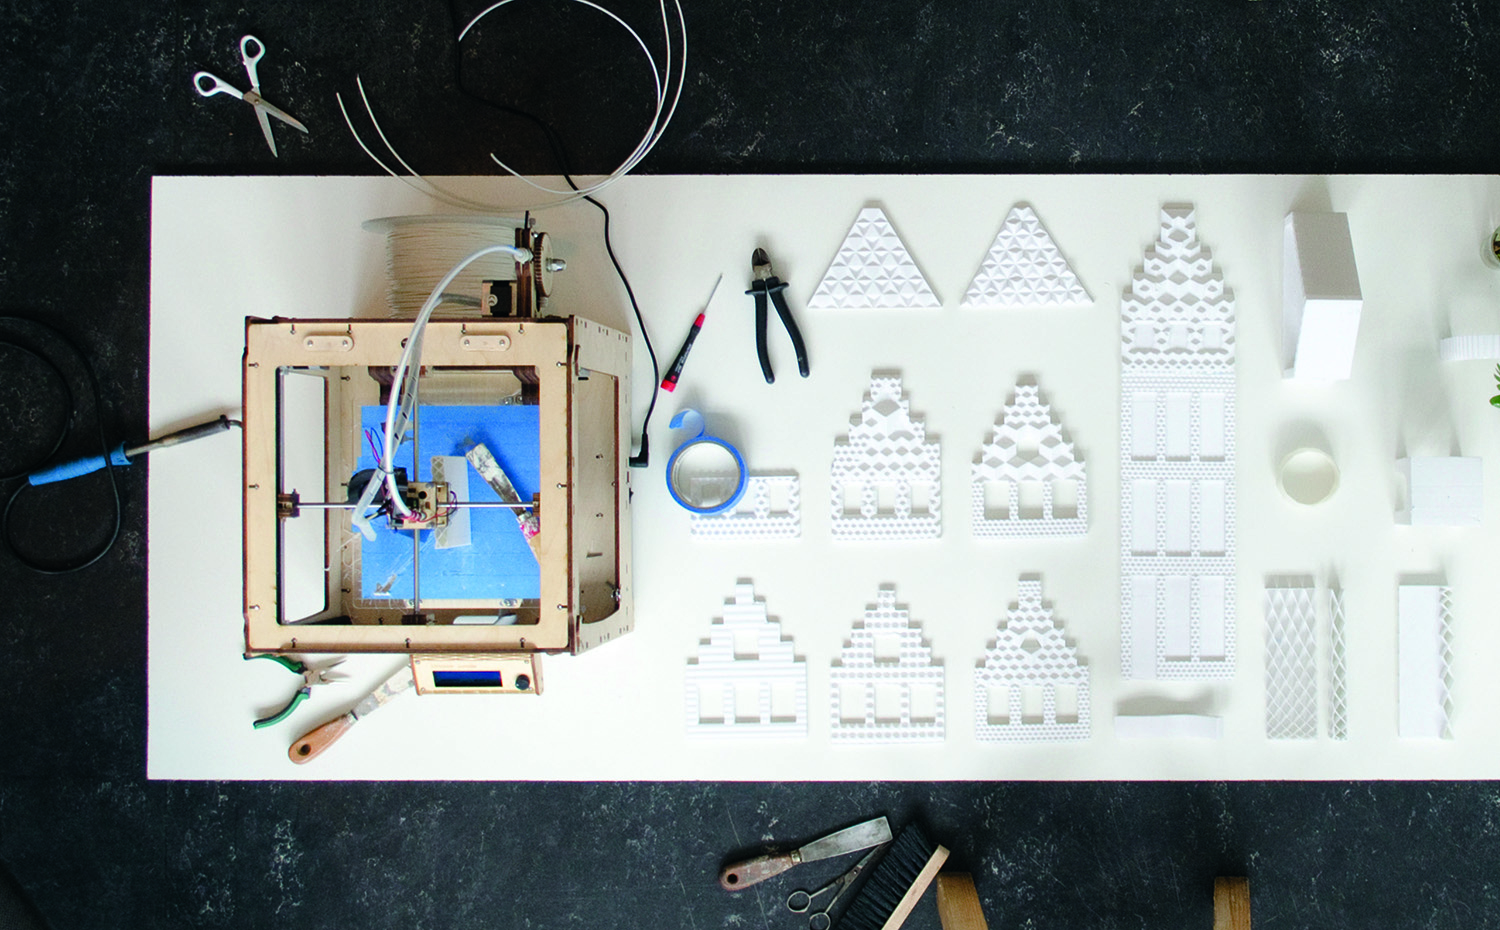 El proyecto 3D Print Canal House en Amsterdam, de DUS Architects, emplea componentes prefabricados de biopolímero con fibras de madera. A partir de estudios a pequeña escala, 3D Print Canal House ha desarrollado impresoras para producir componentes estructurales a tamaño real